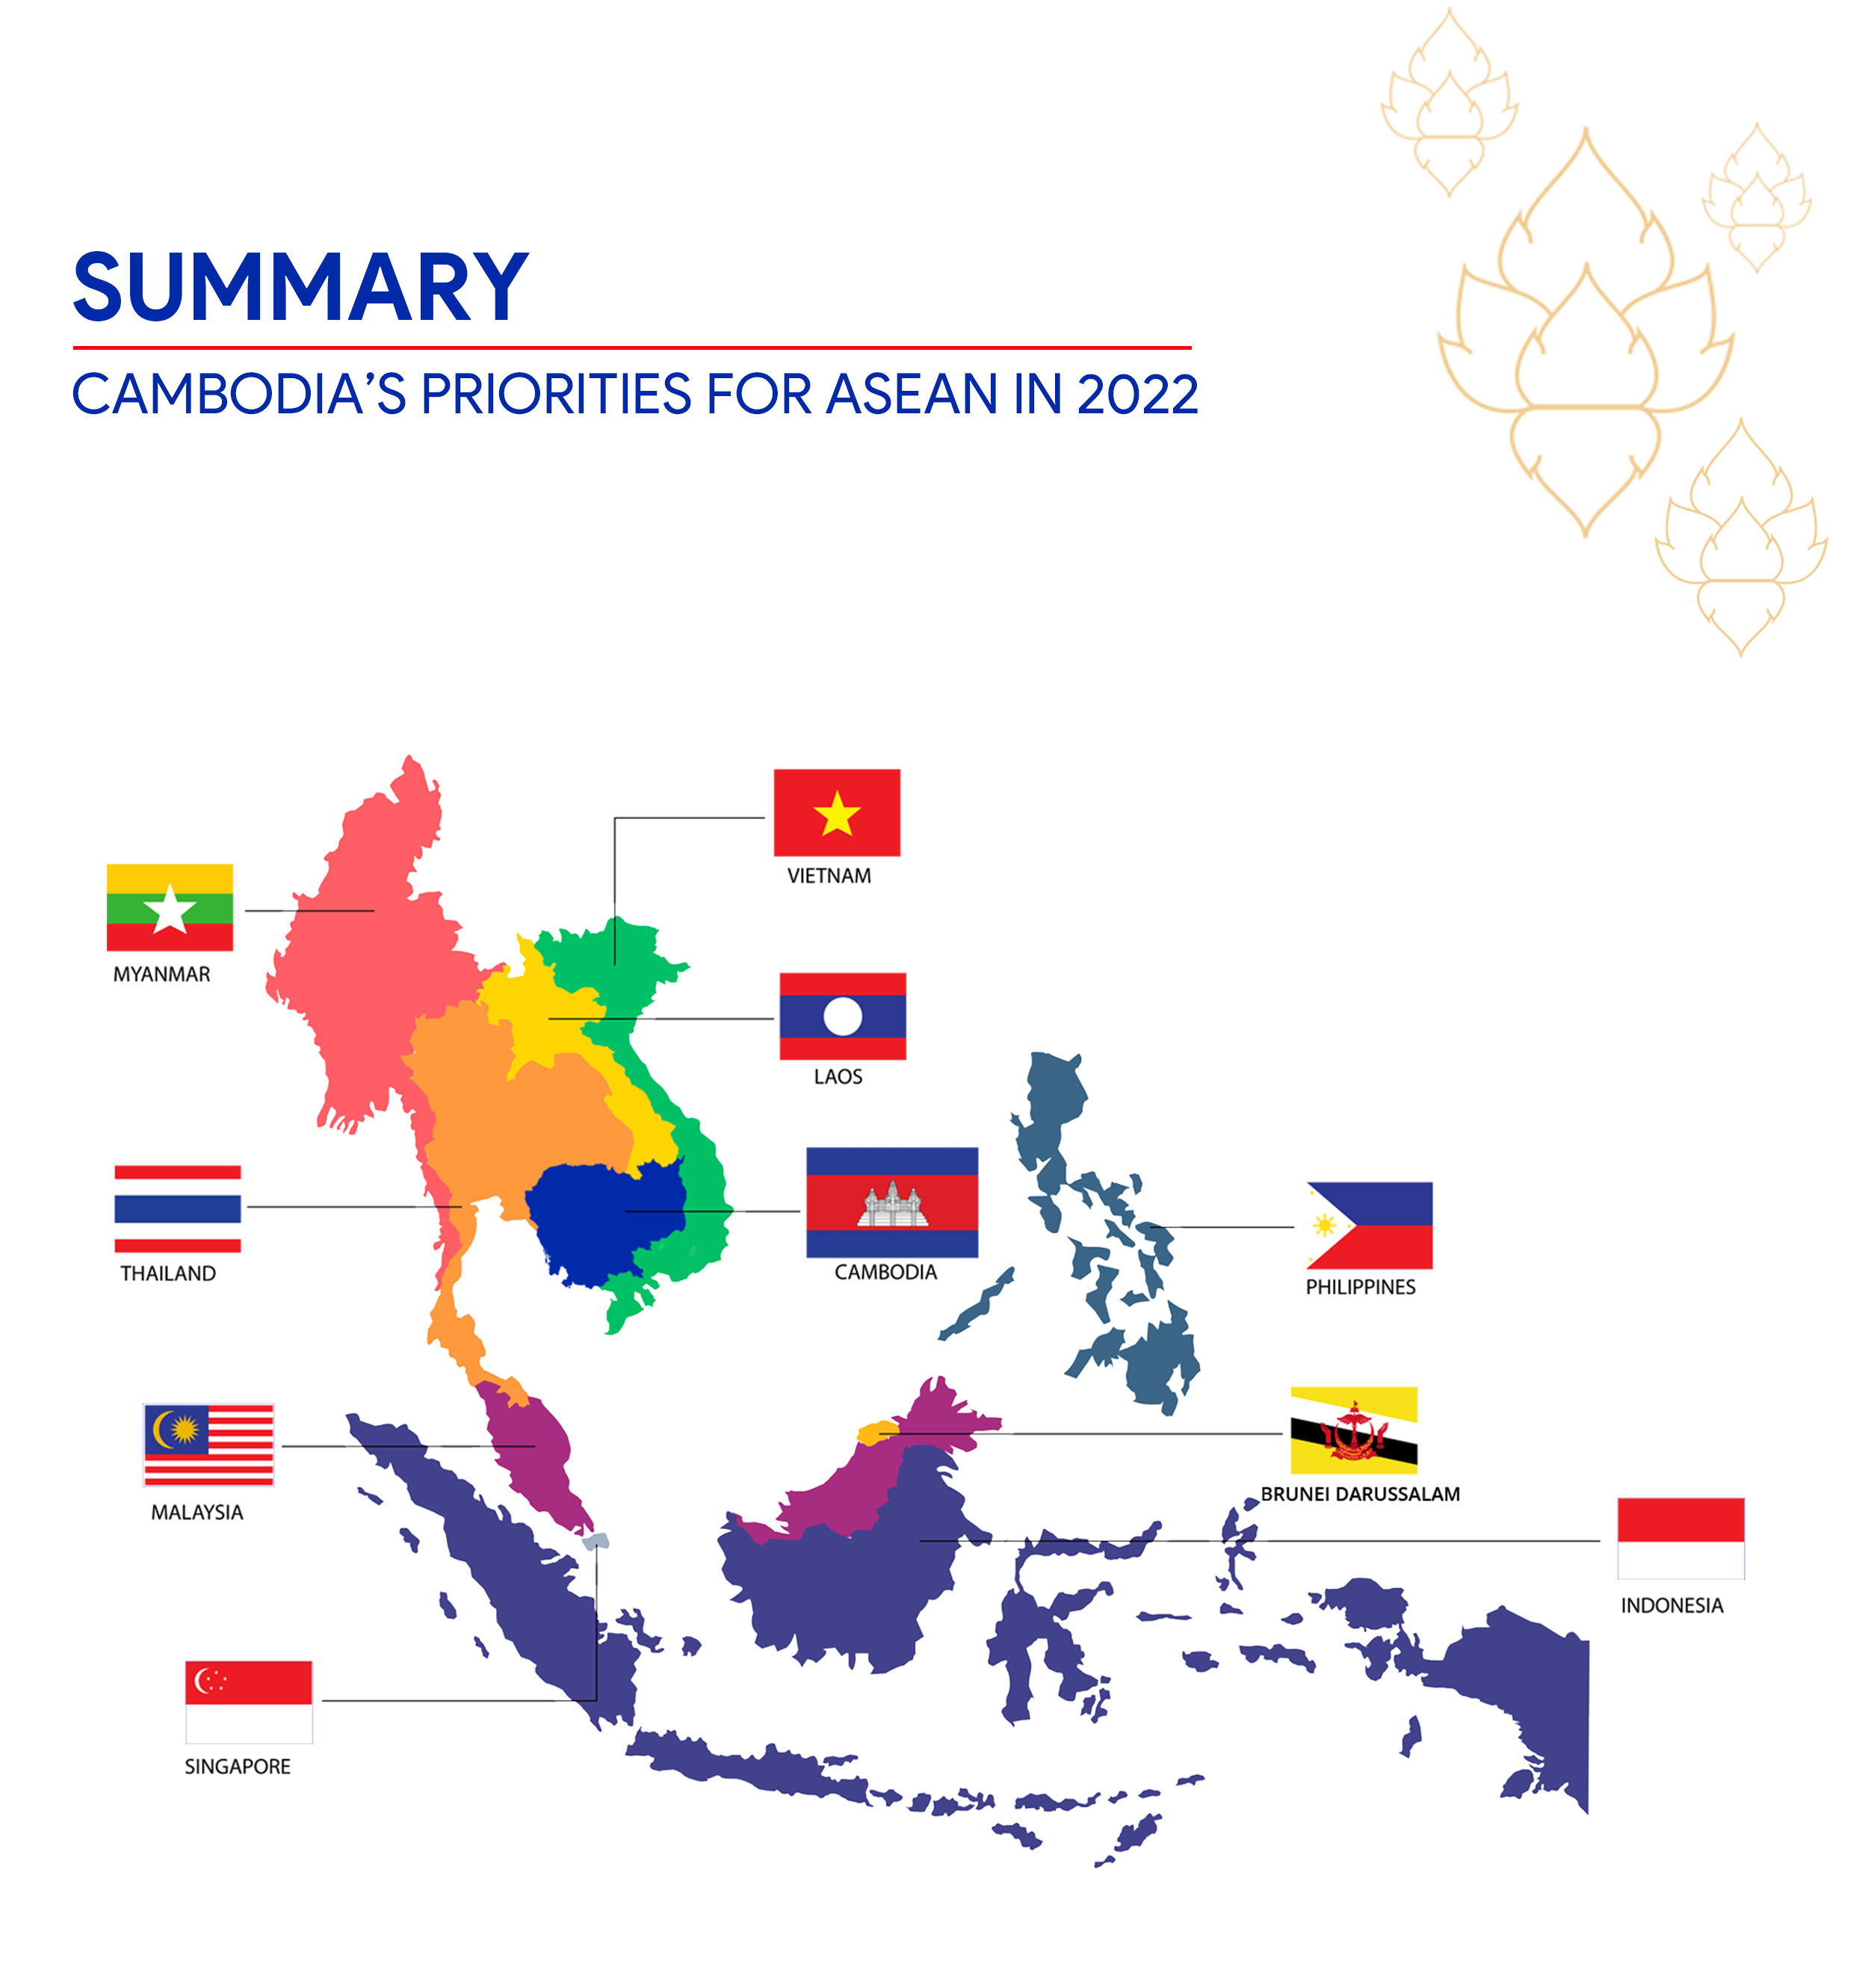 SUMMARY OF CAMBODIA’S PRIORITIES FOR ASEAN IN 2022)